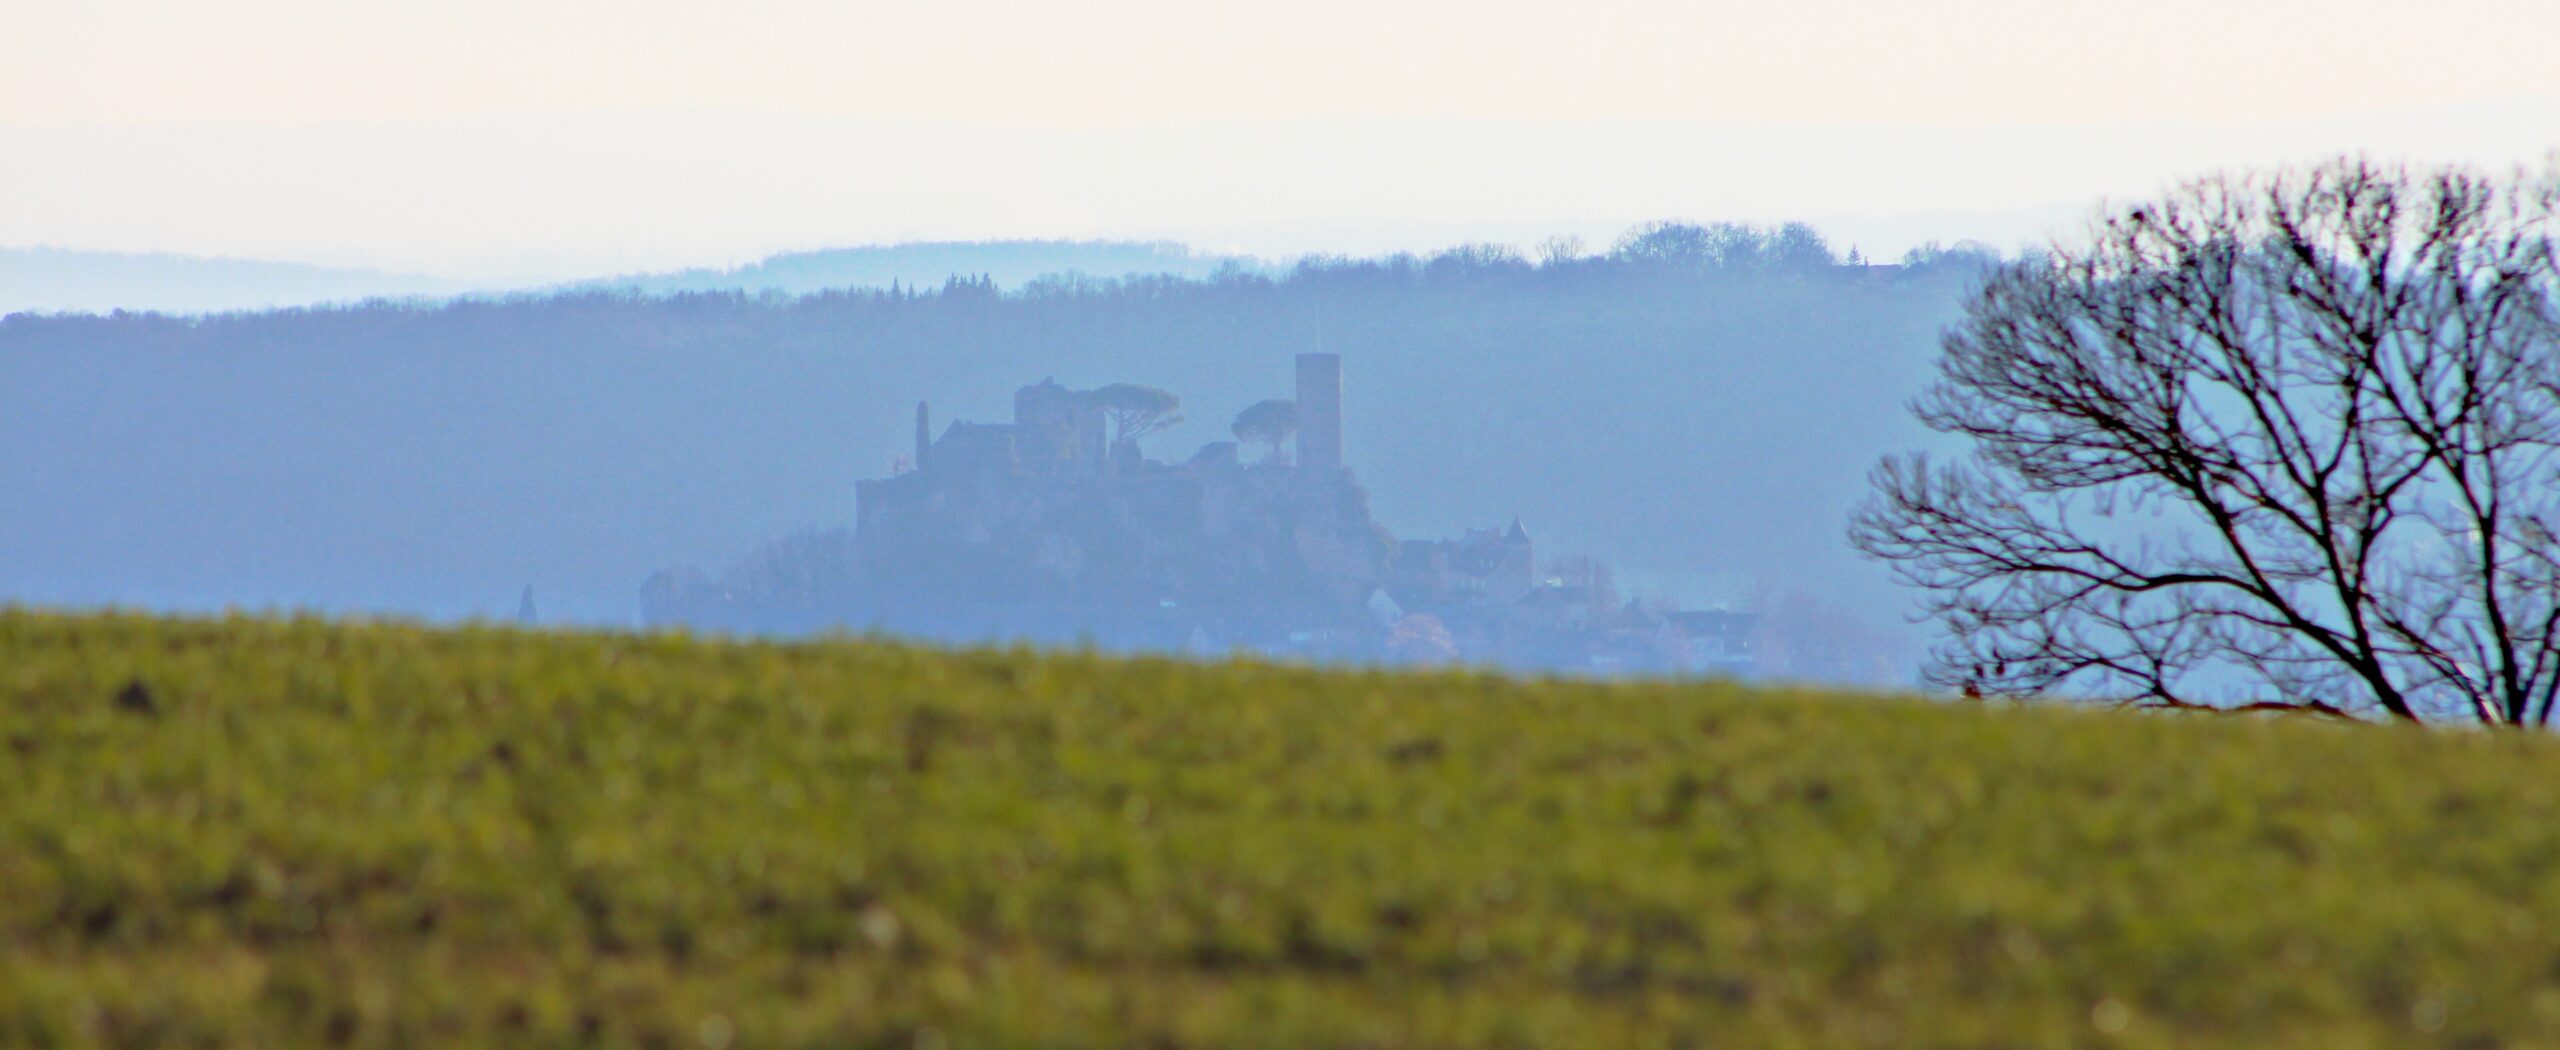 Château fort de Turenne